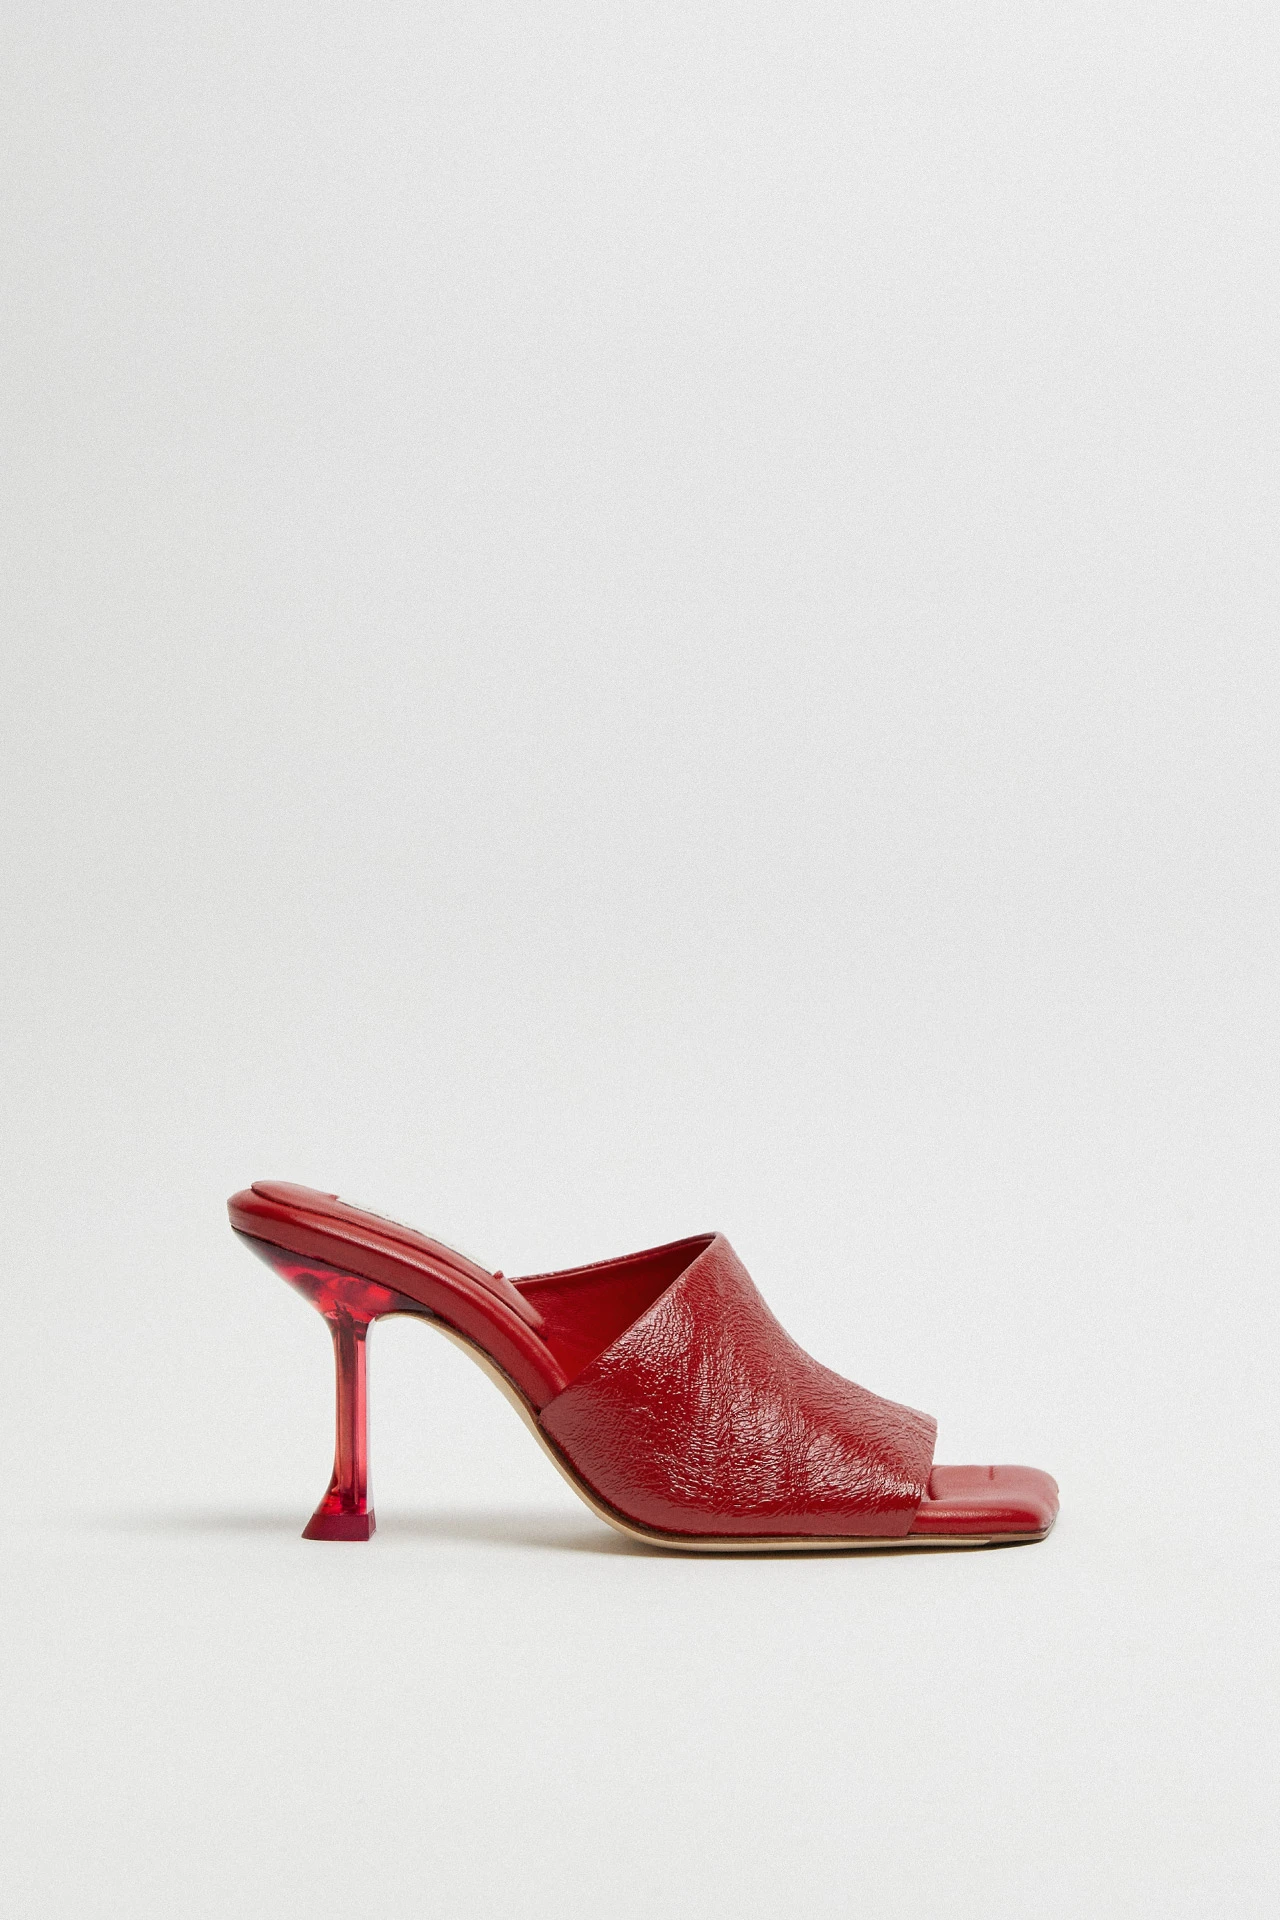 Miista-Miri-Red-Mules-Sandals-01